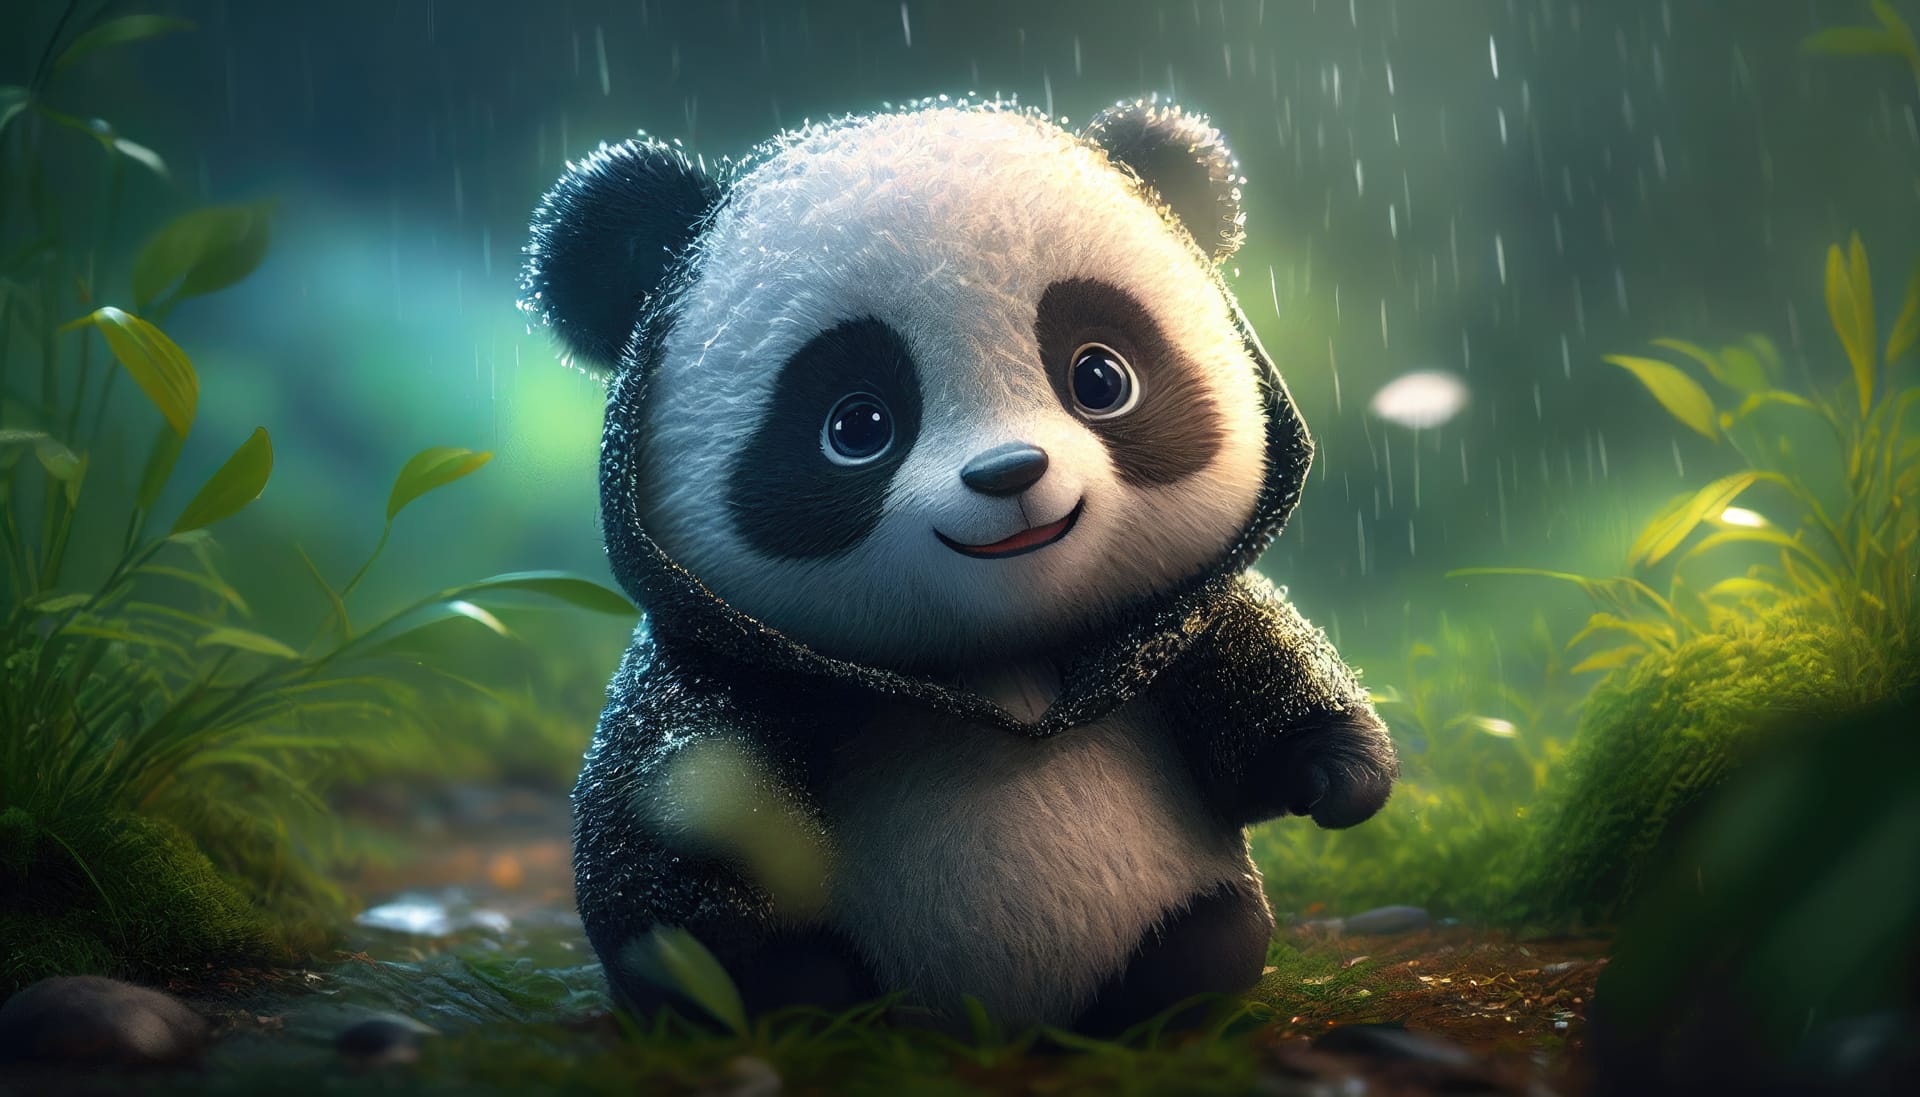 Panda pictures panda bear raincoat sits rain